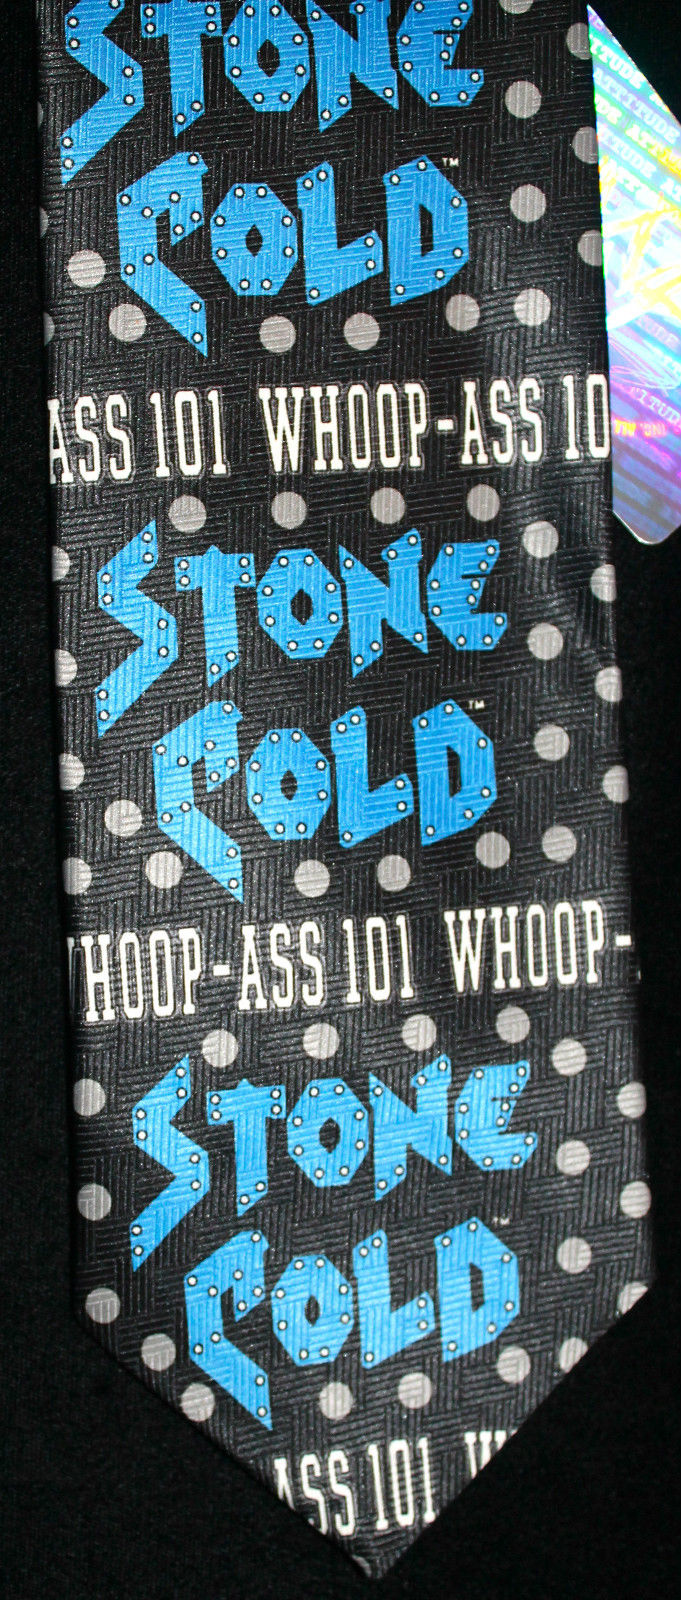 Stone Cold Steve Austin necktie 2